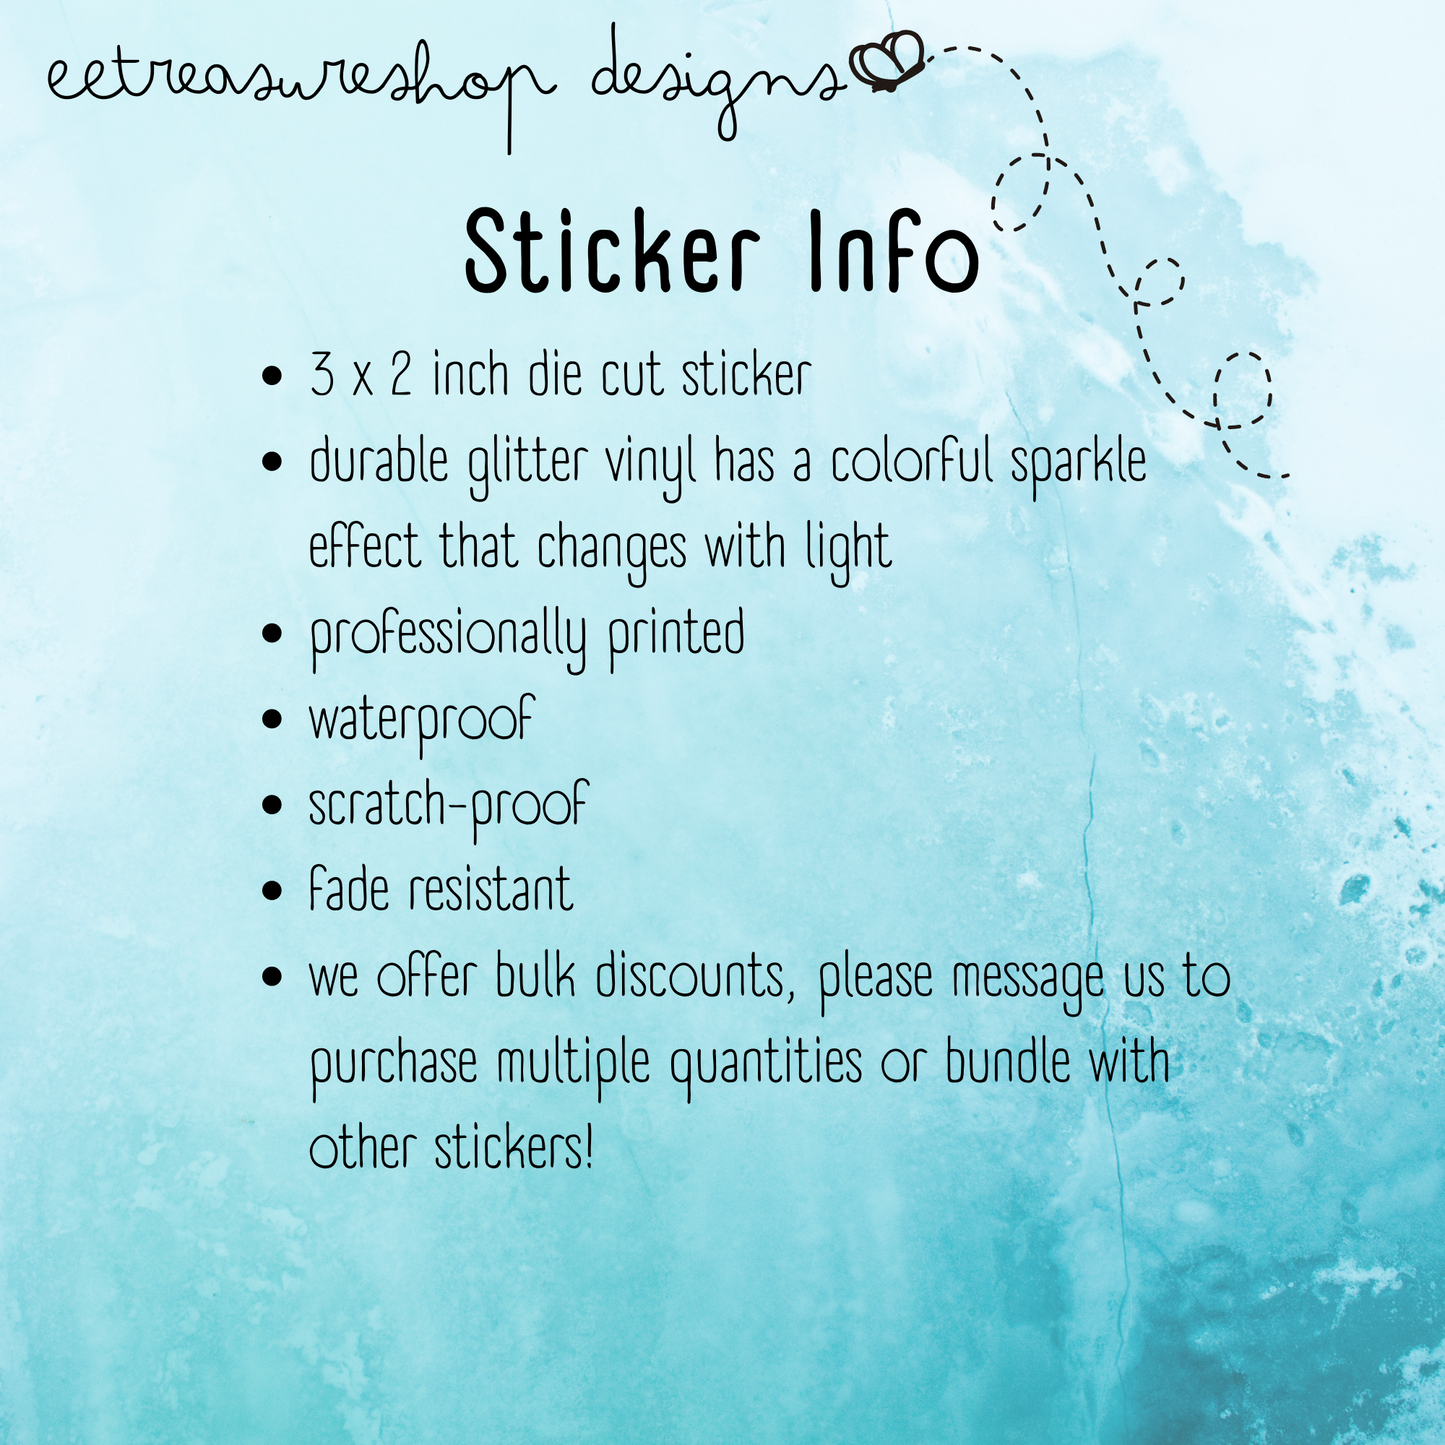 Eat Sleep Twirl Repeat Baton Twirler Waterproof Vinyl Holographic Glitter Sticker